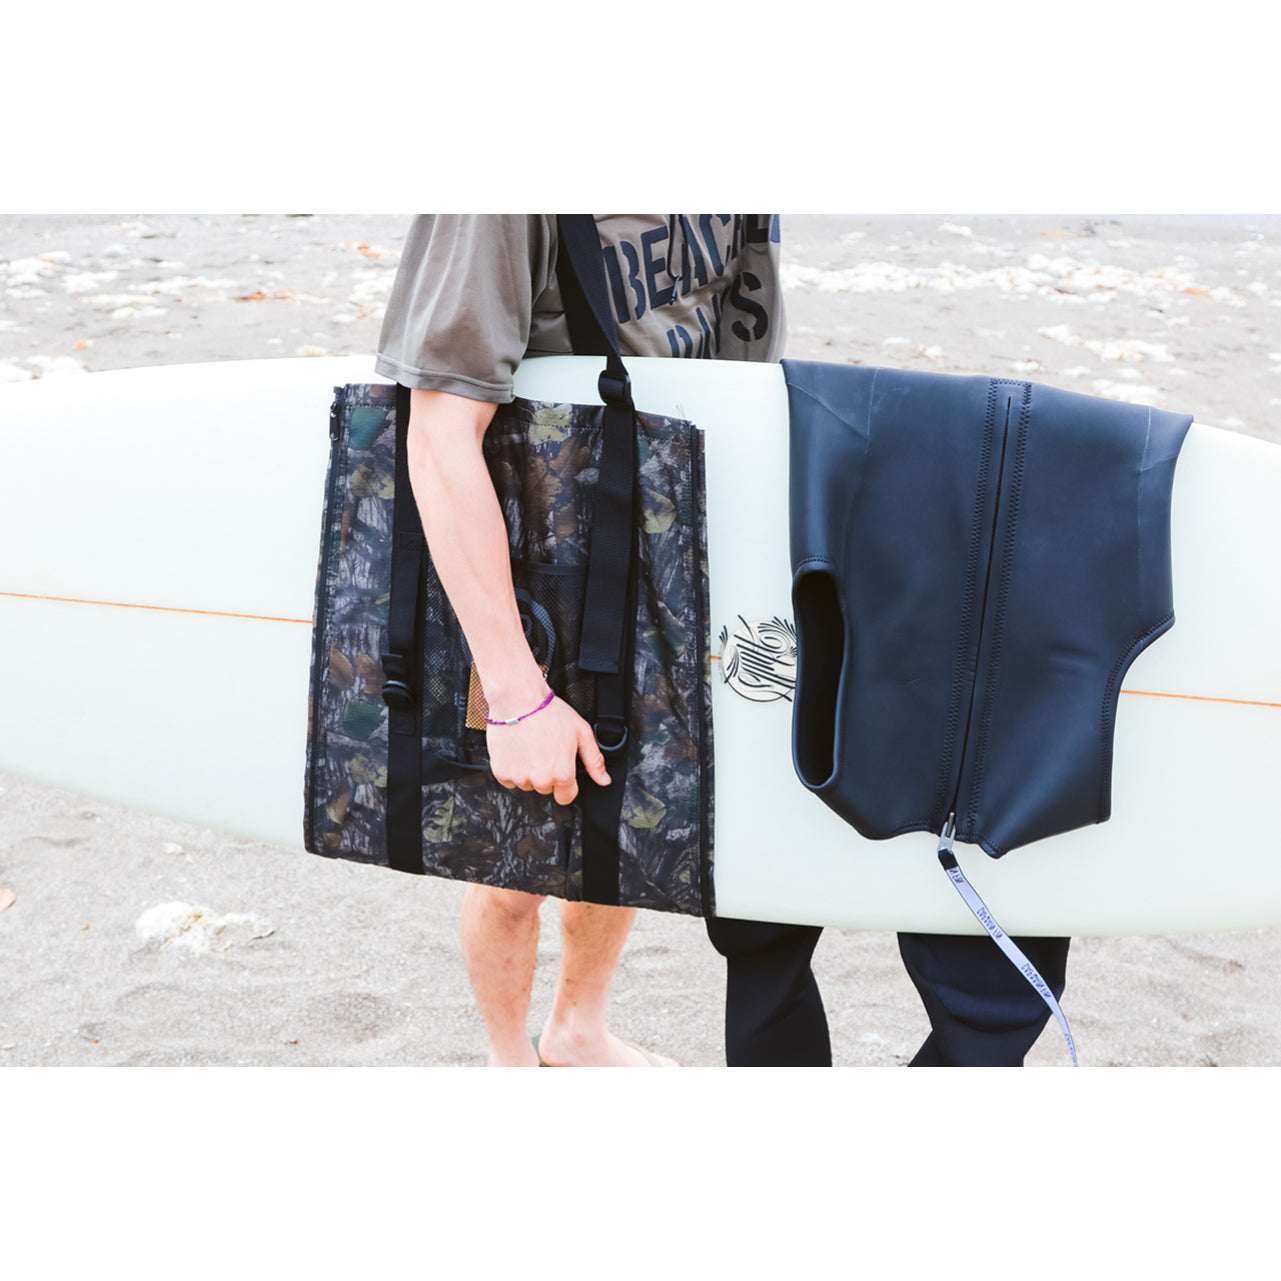 surf carry bag 